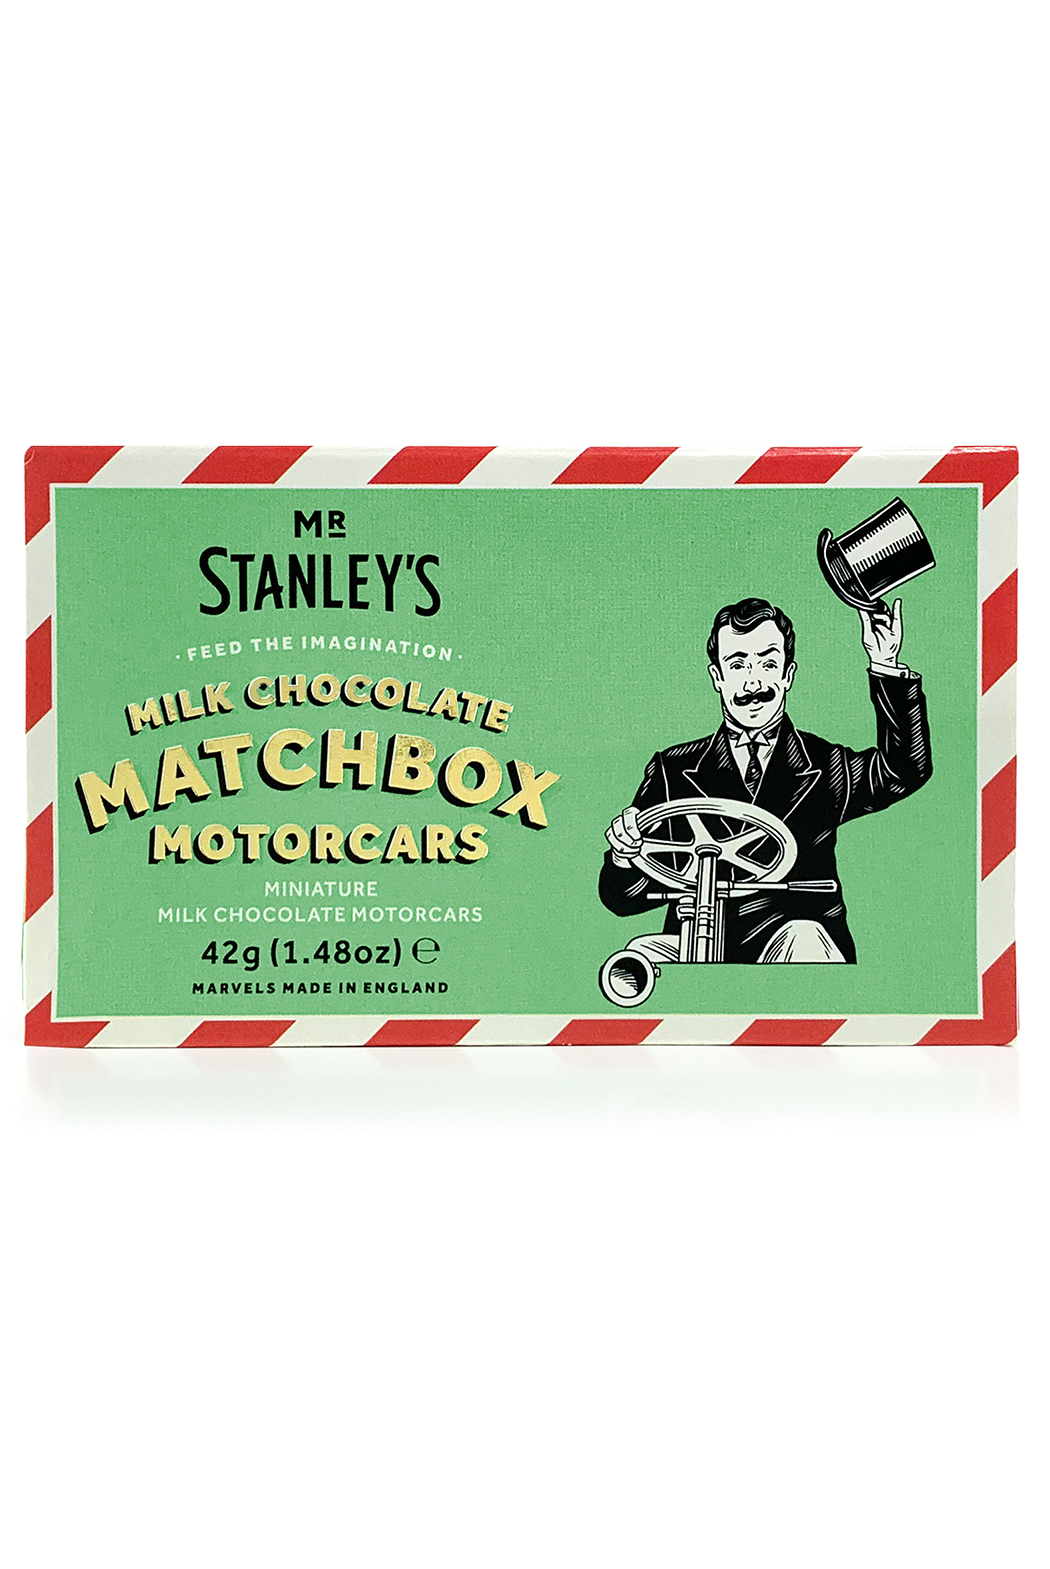 Mr Stanley's Milk Chocolate Matchbox Motorcars